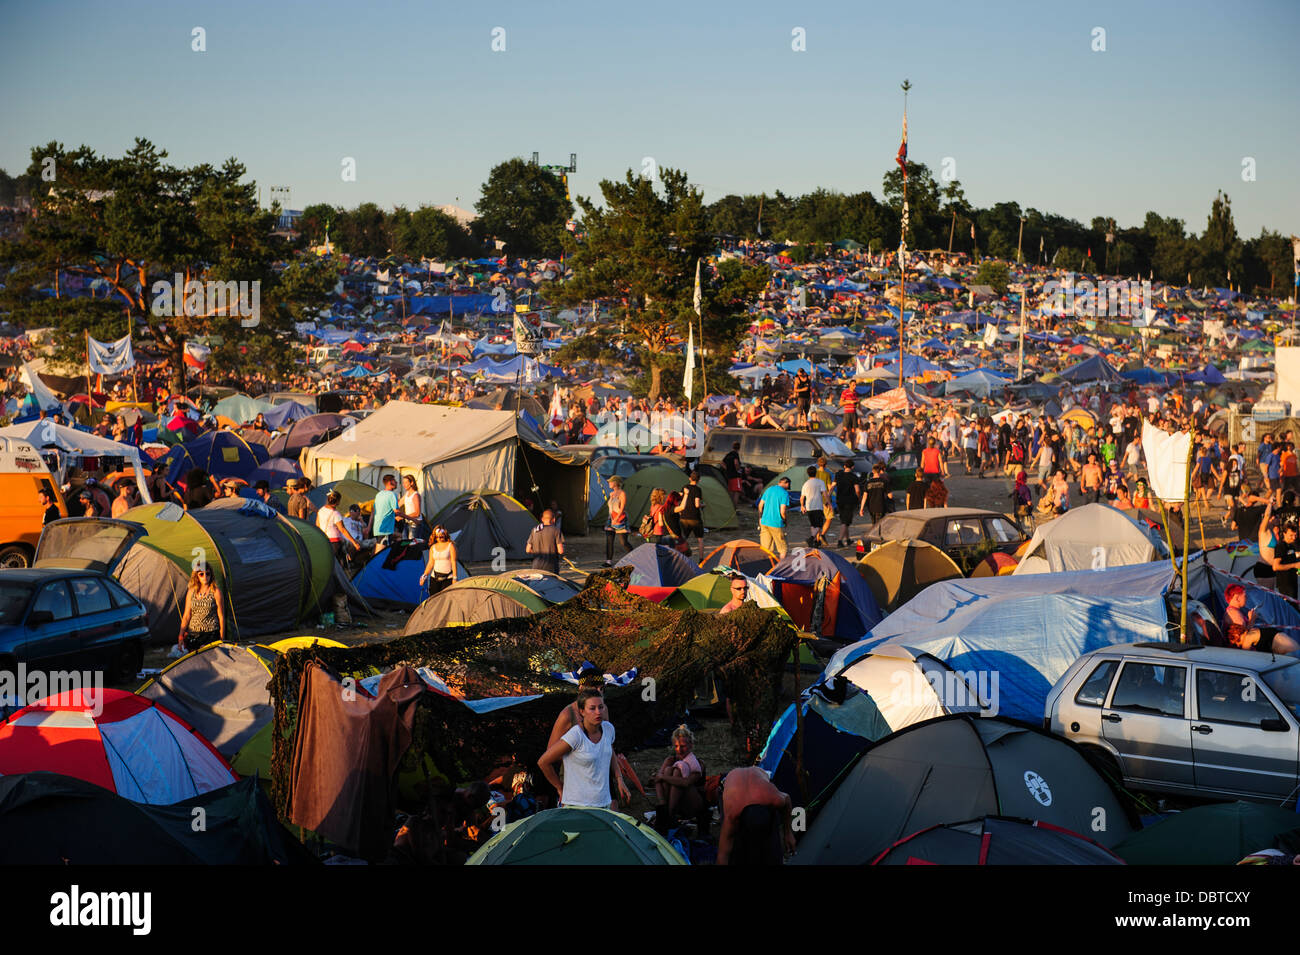 Vista generale del campeggio principale al Przystanek Woodstock music festival, Kostrzyn, Polonia. Foto Stock